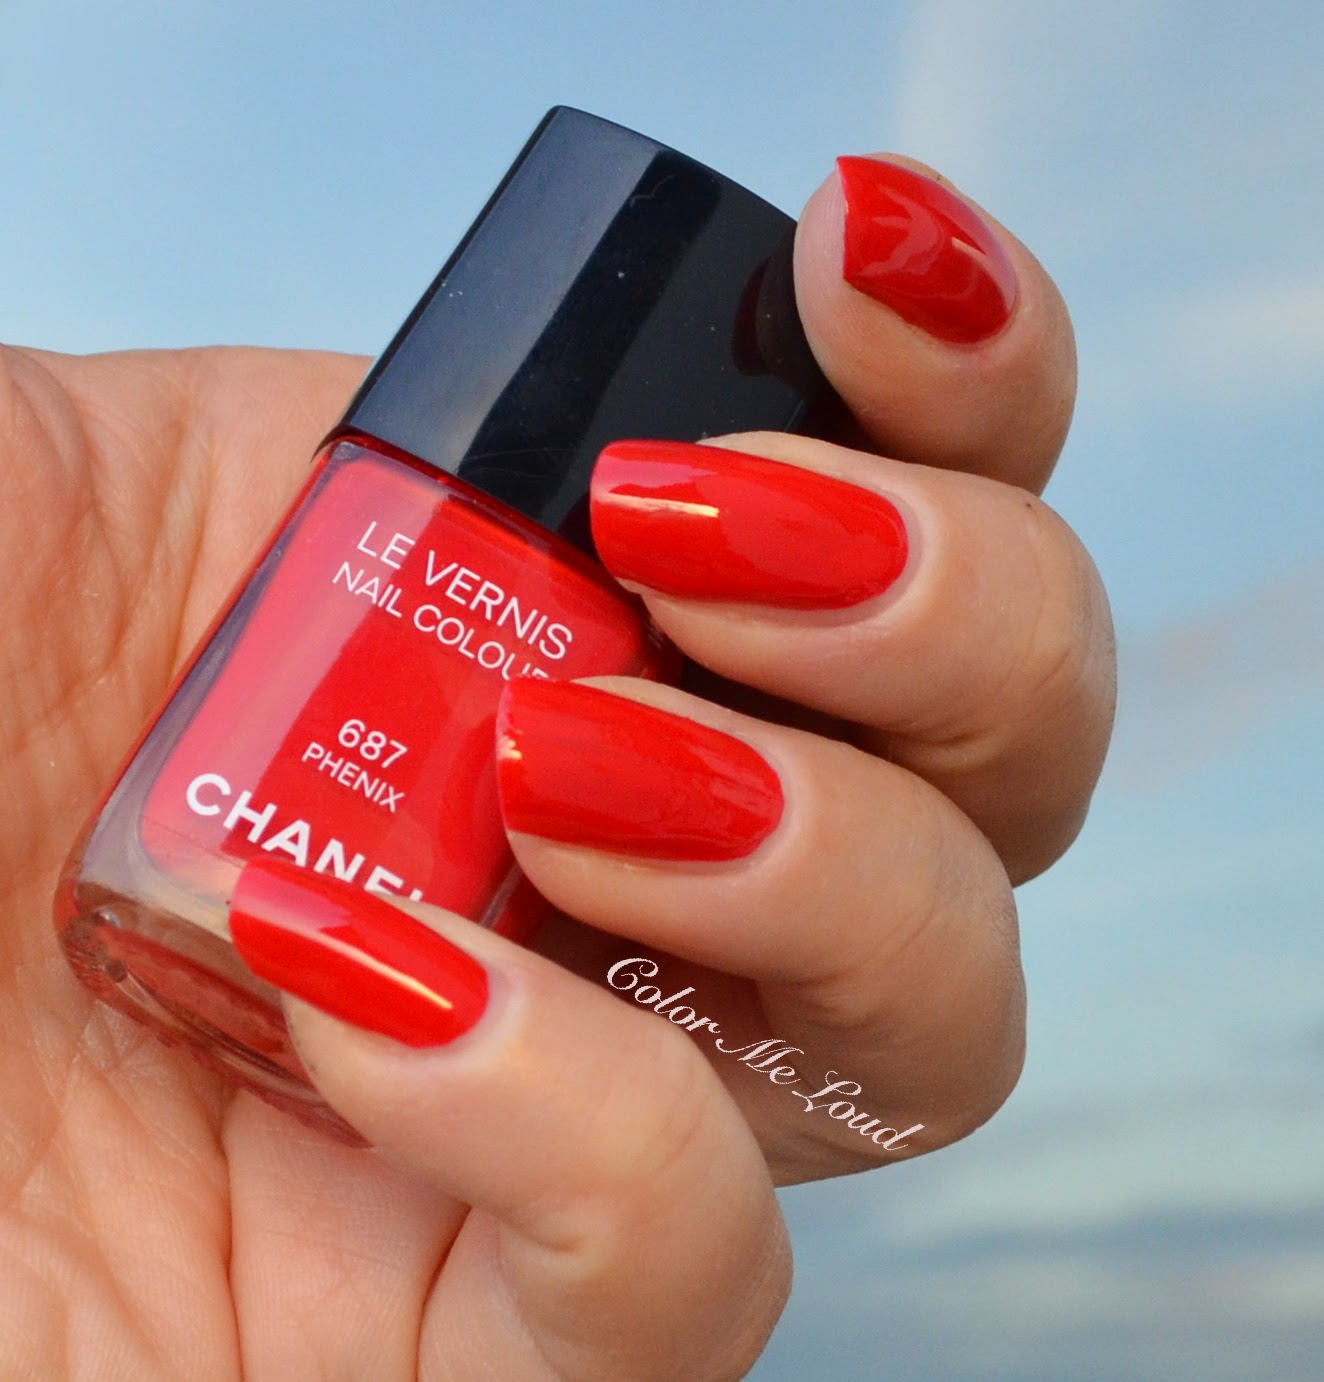 Chanel Phenix nail polish Holidays 2014 review – Bay Area Fashionista